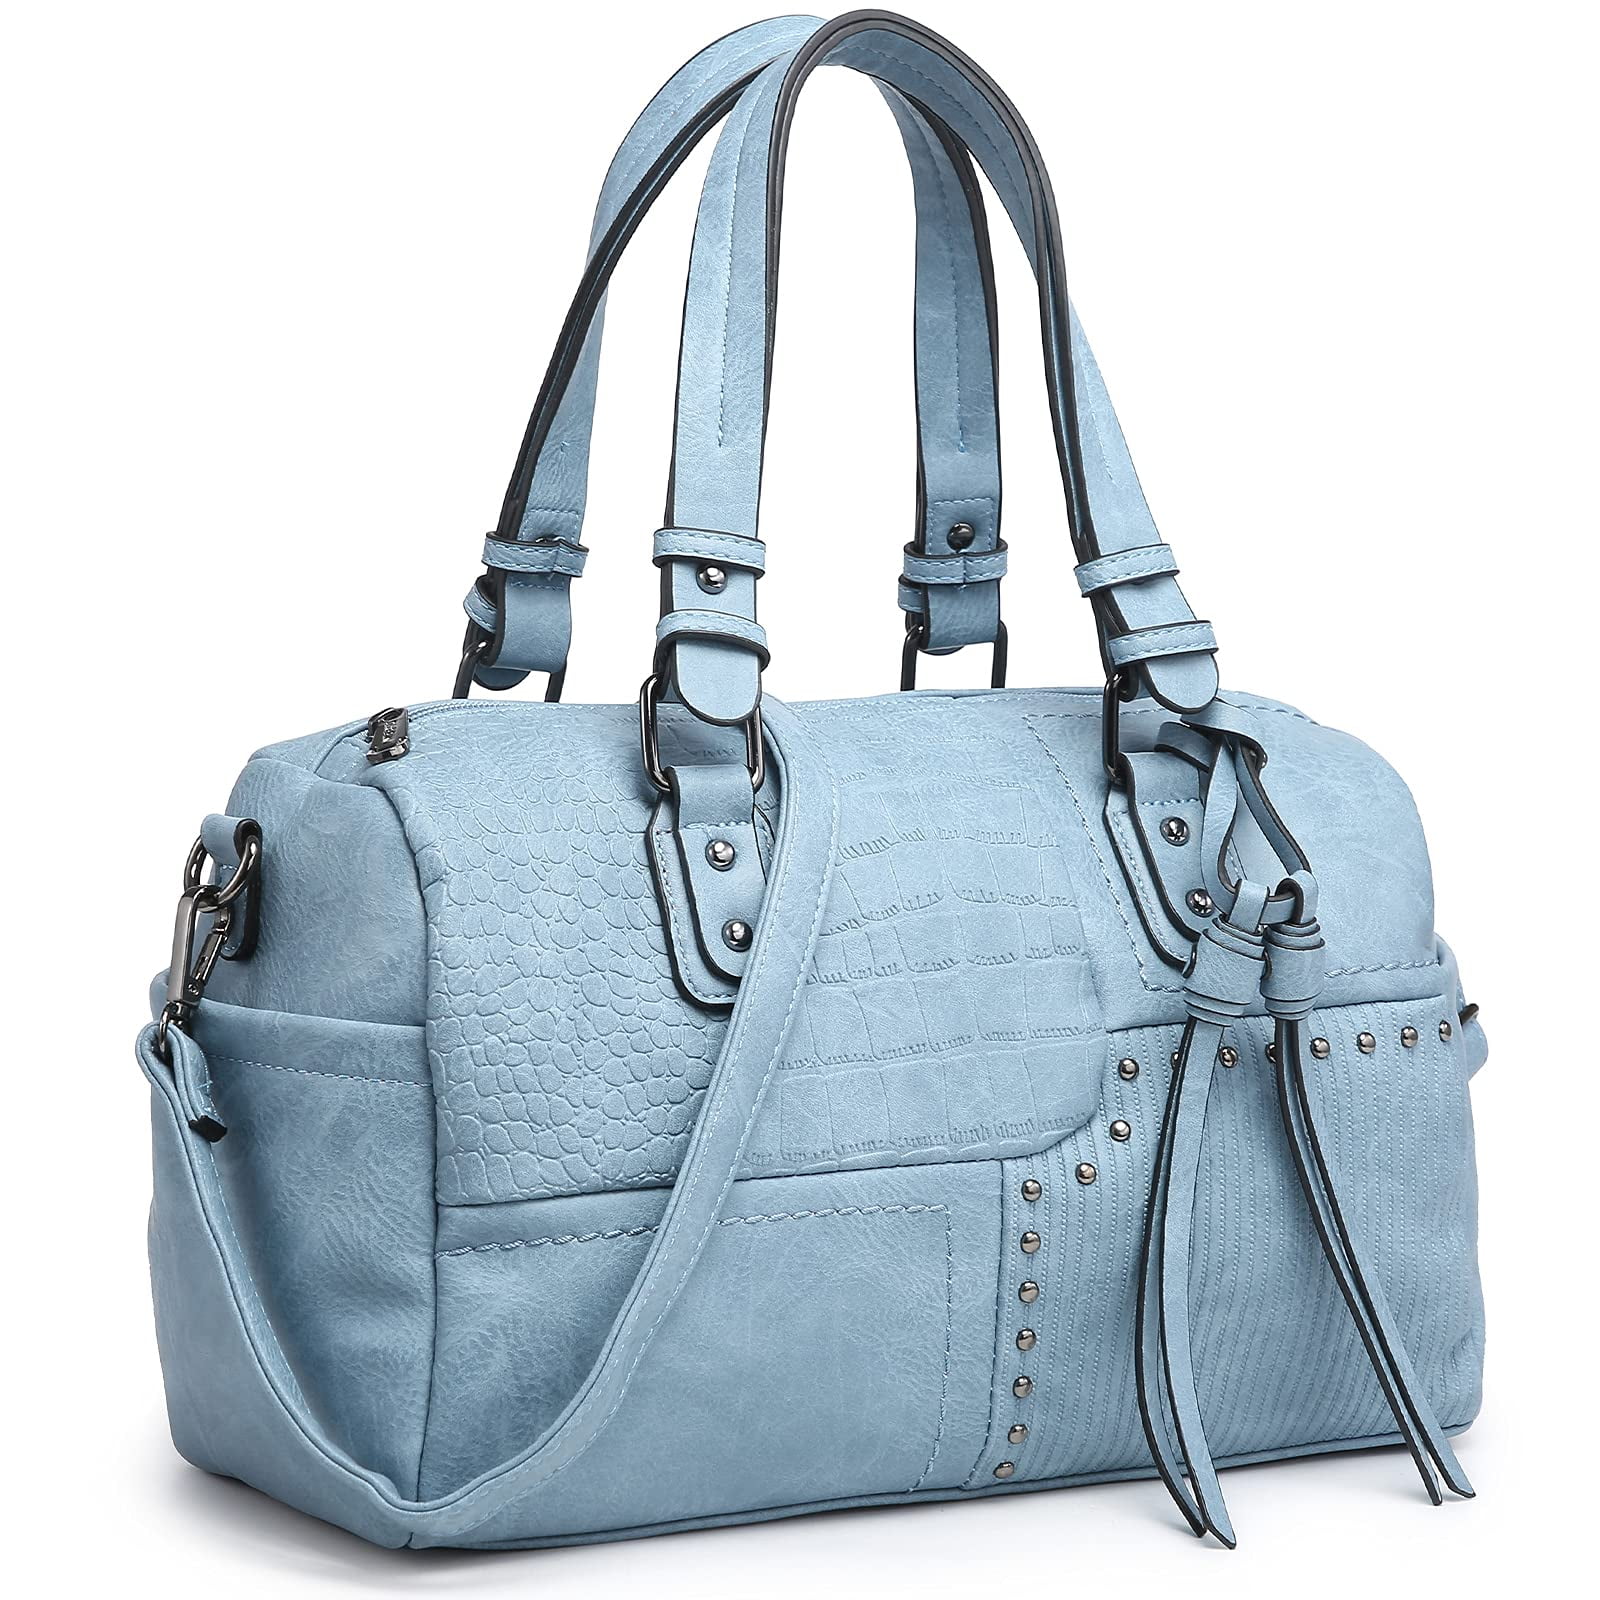 ❤Women's Soft Nylon Tote Shoulder Bags Handbags Satchel Messenger Bag Purse 